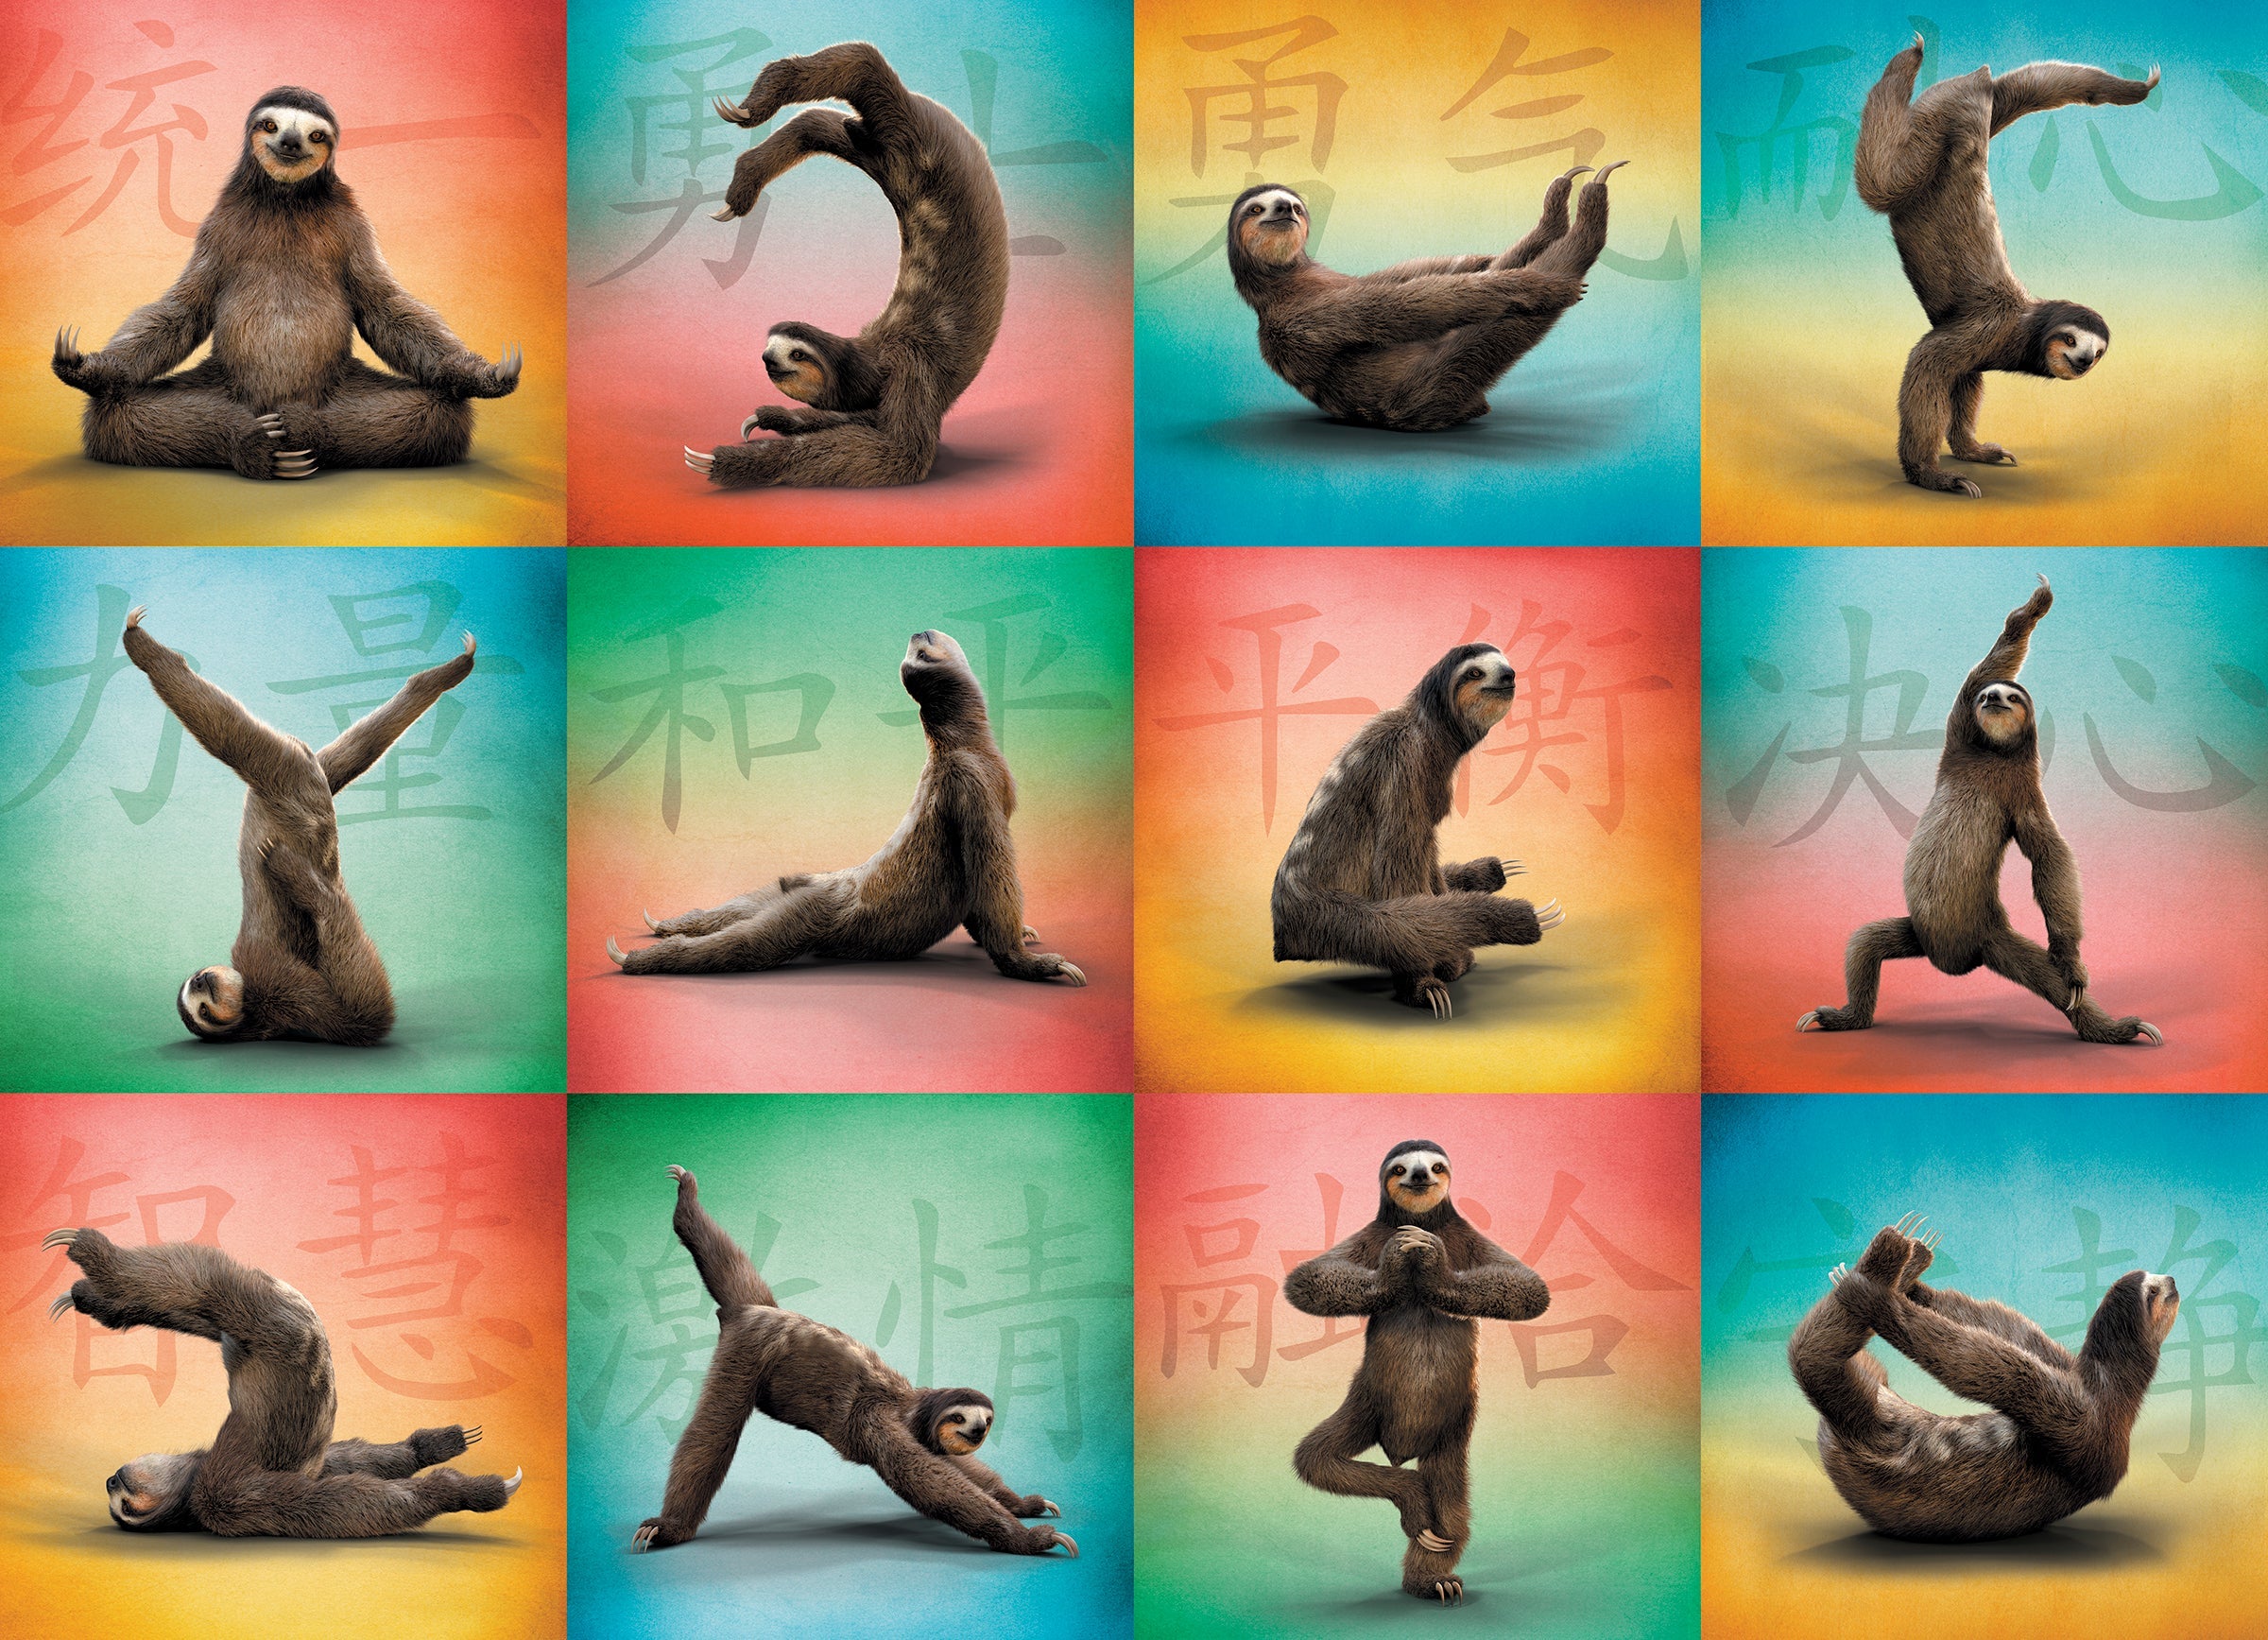 Sloth Yoga 1000 Piece - Jigsaw Puzzle